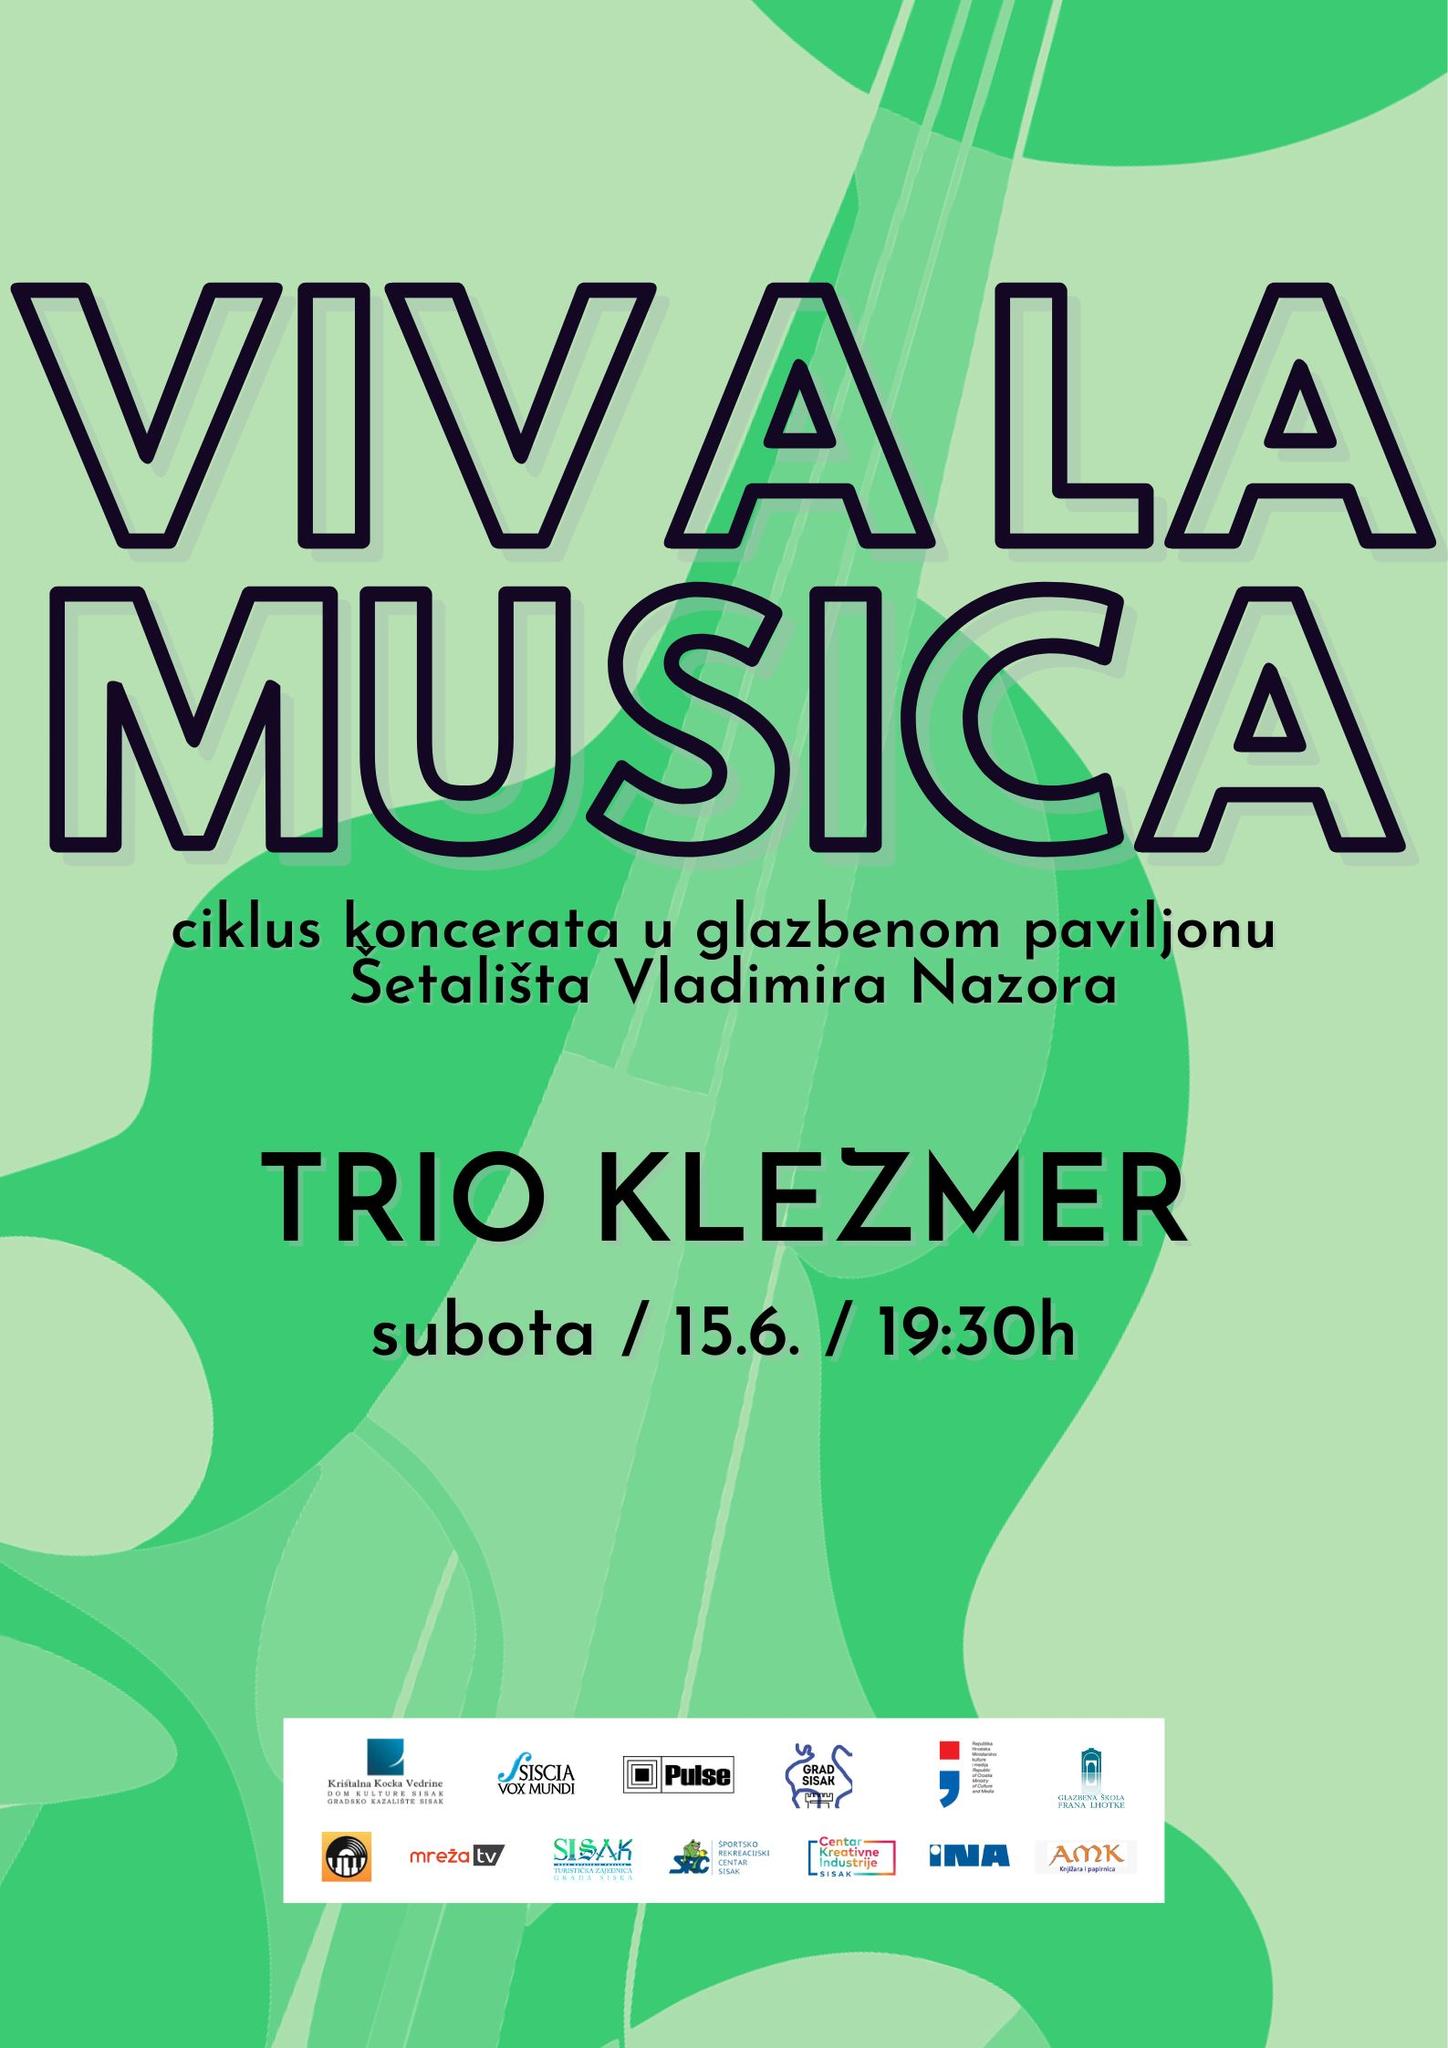 You are currently viewing Viva la musica – ZAGREB KLEZMER TRIO